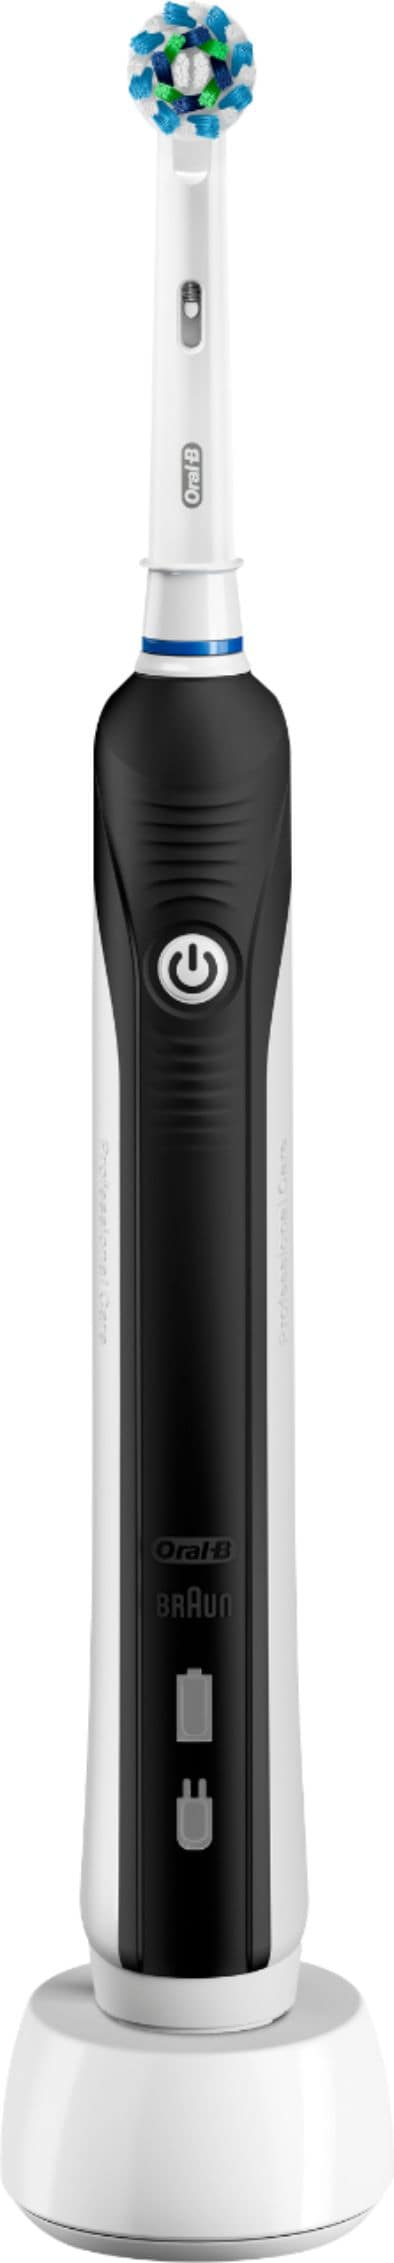 Oral-B - Pro 1000 Electric Toothbrush - Black_0